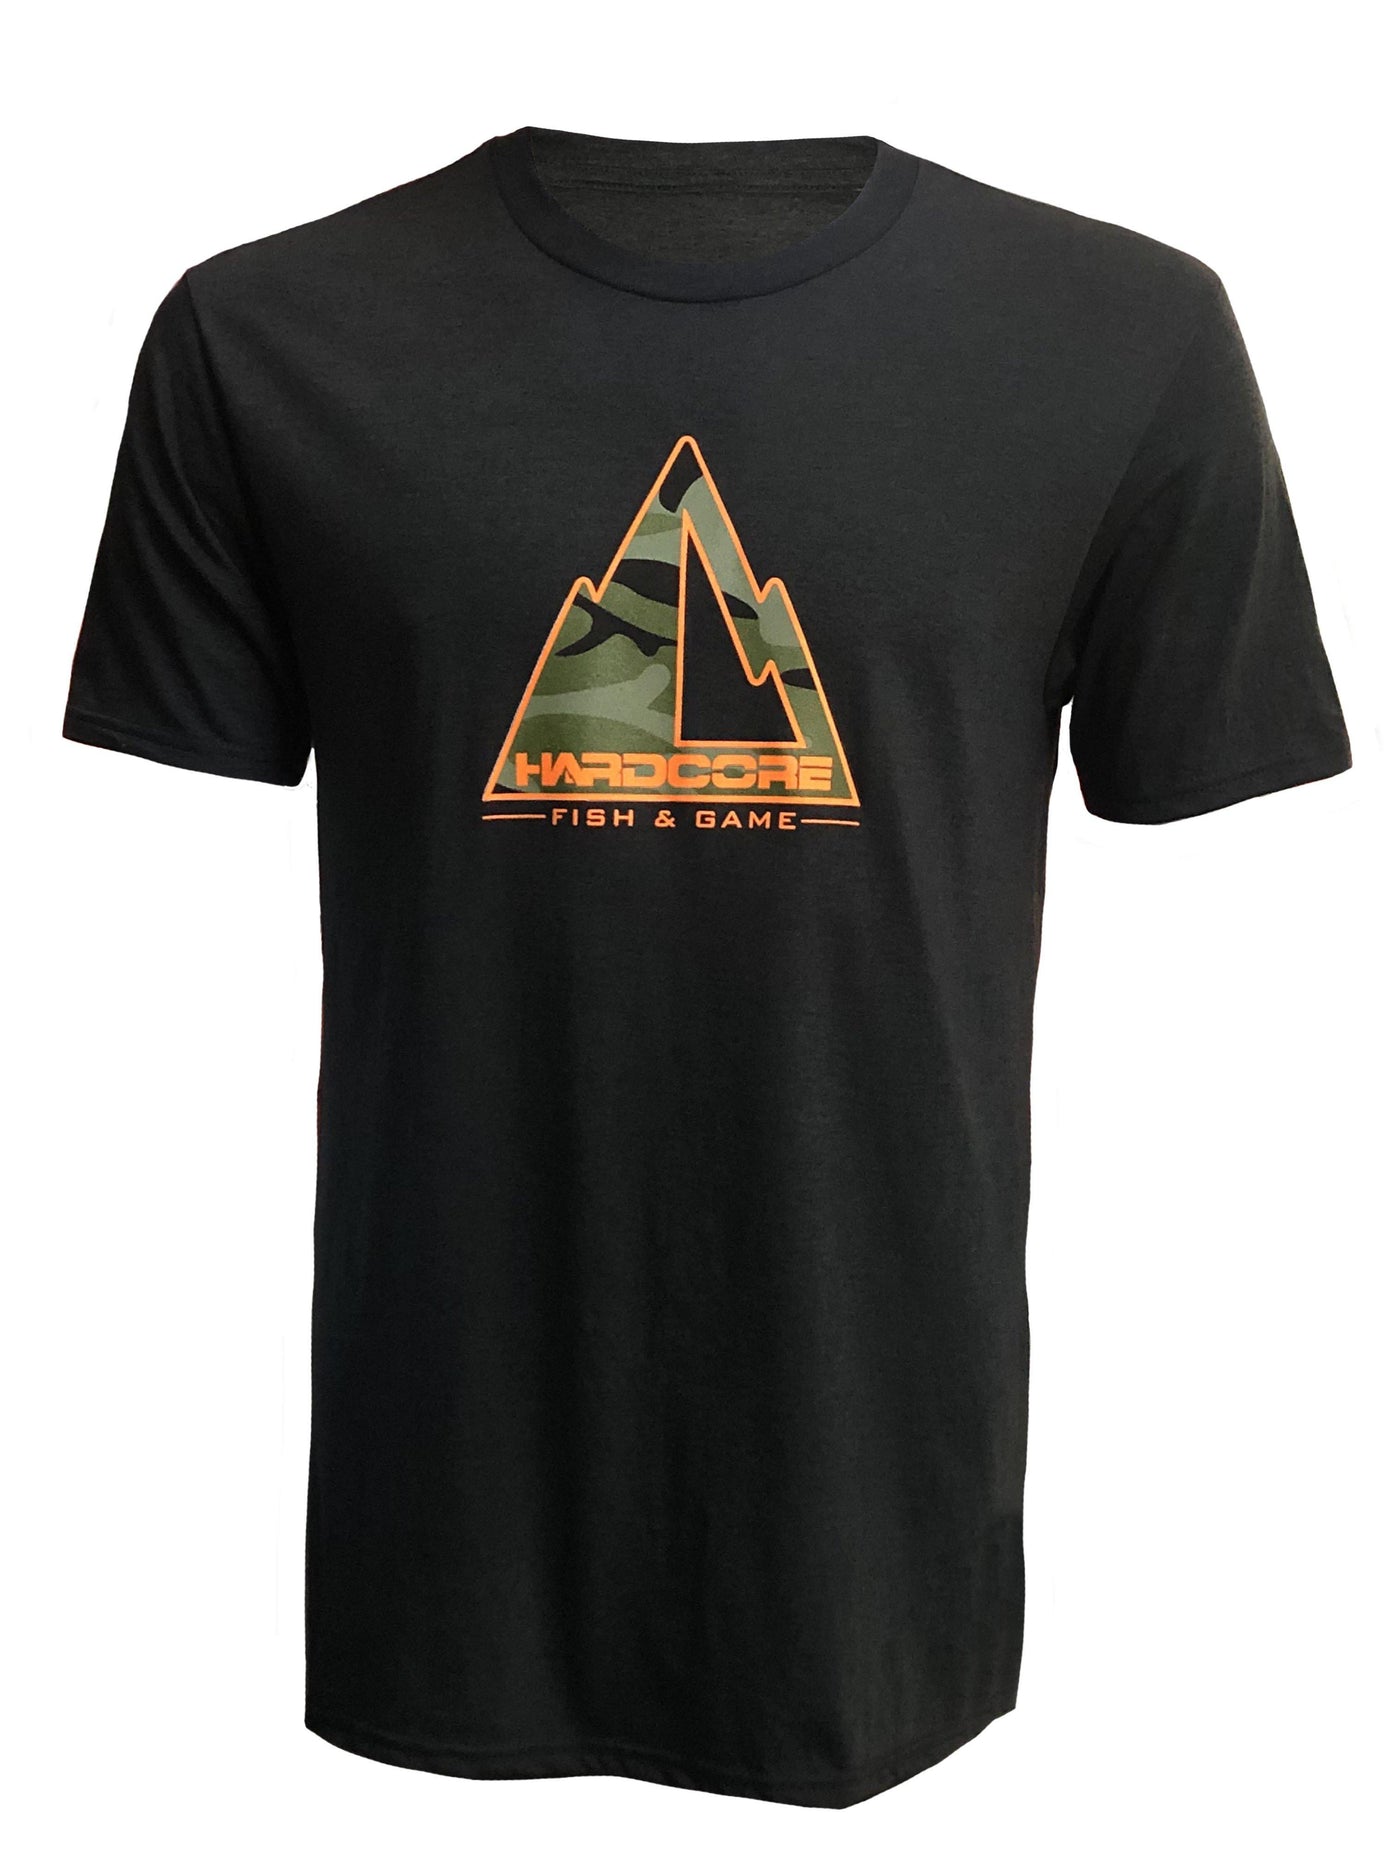 Hardcore Mountain Original Soft T-Shirt (Color Options Available) - Hardcore Fish & Game